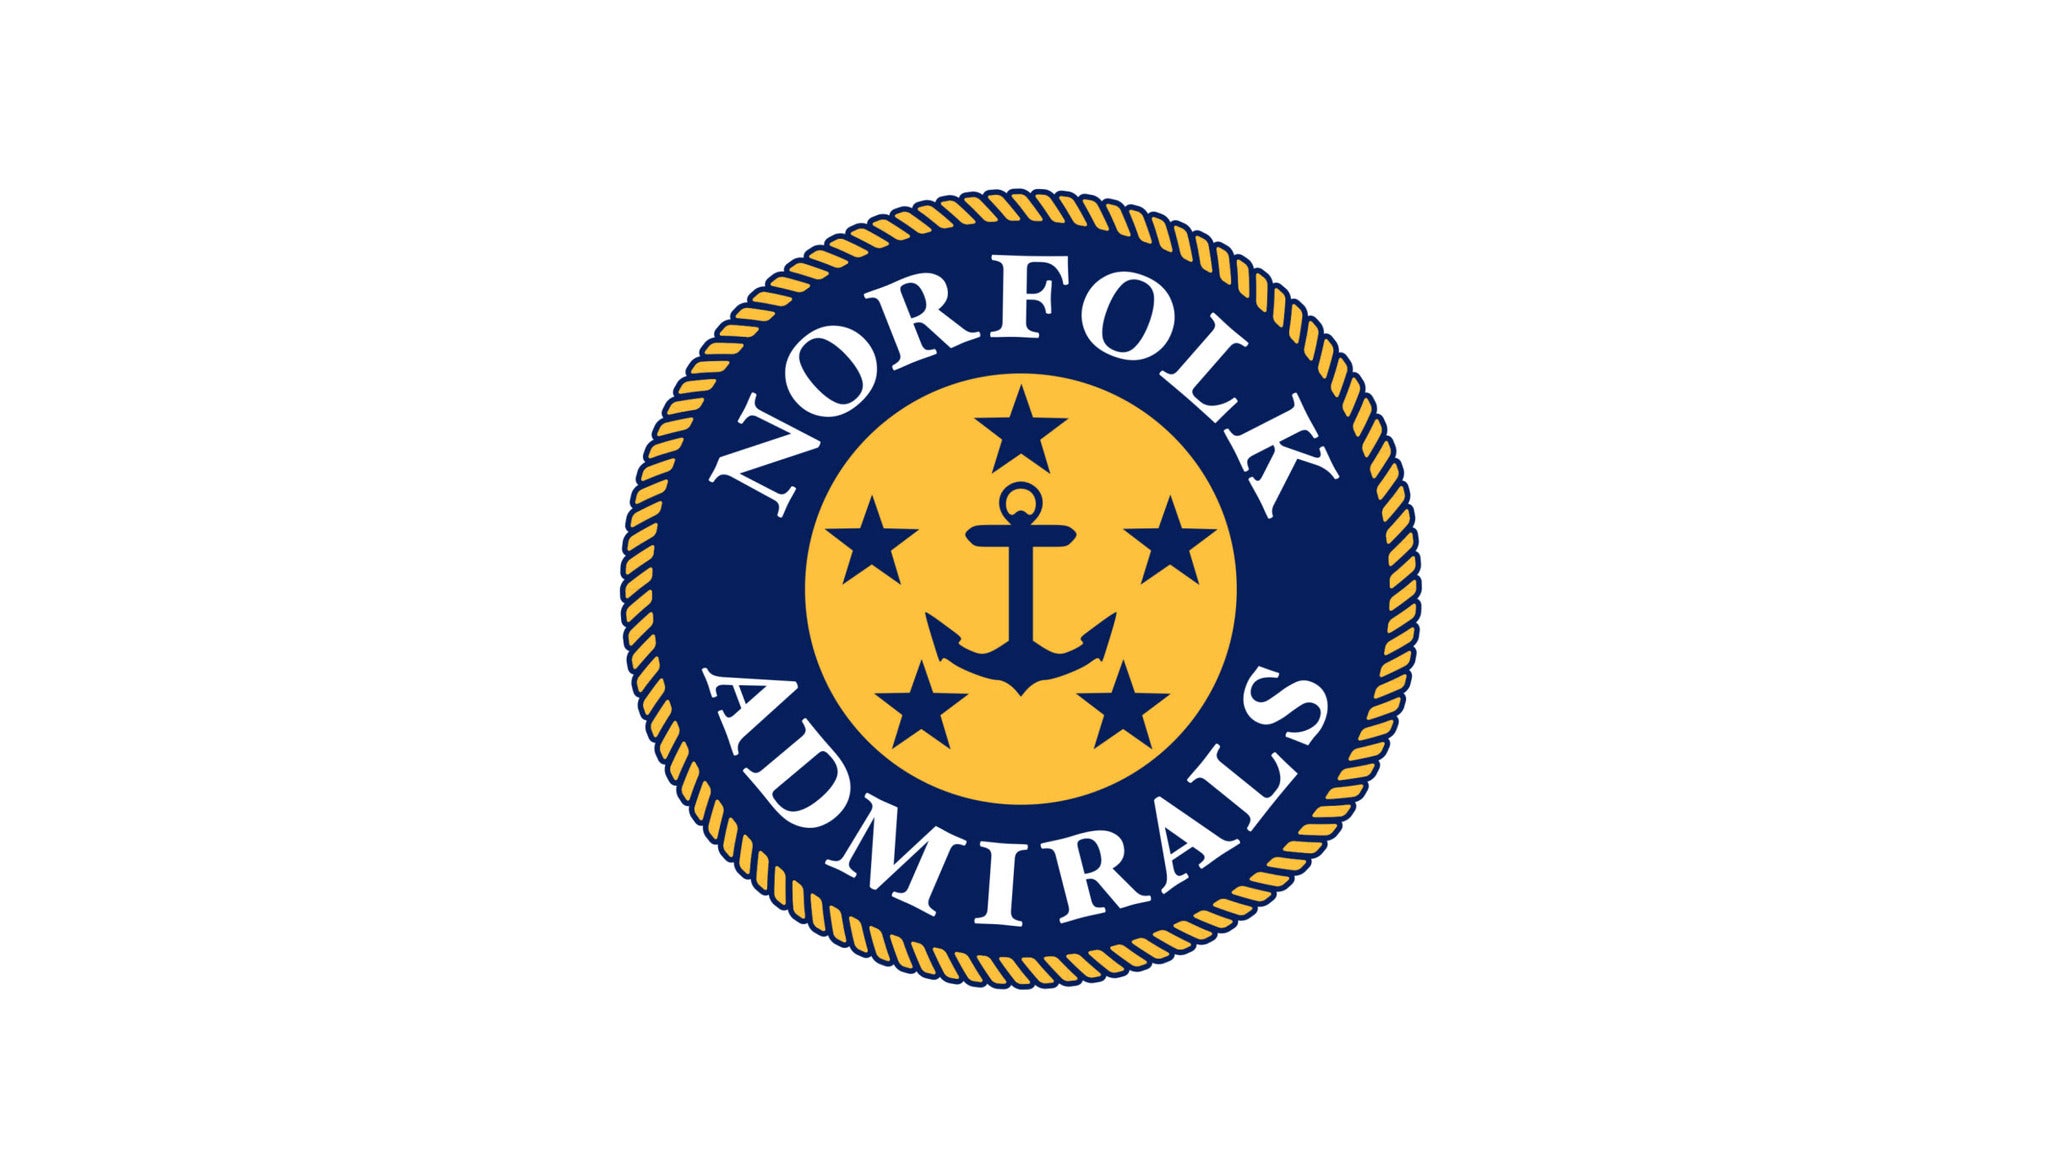 Norfolk Admirals vs. Reading Royals at Scope Arena